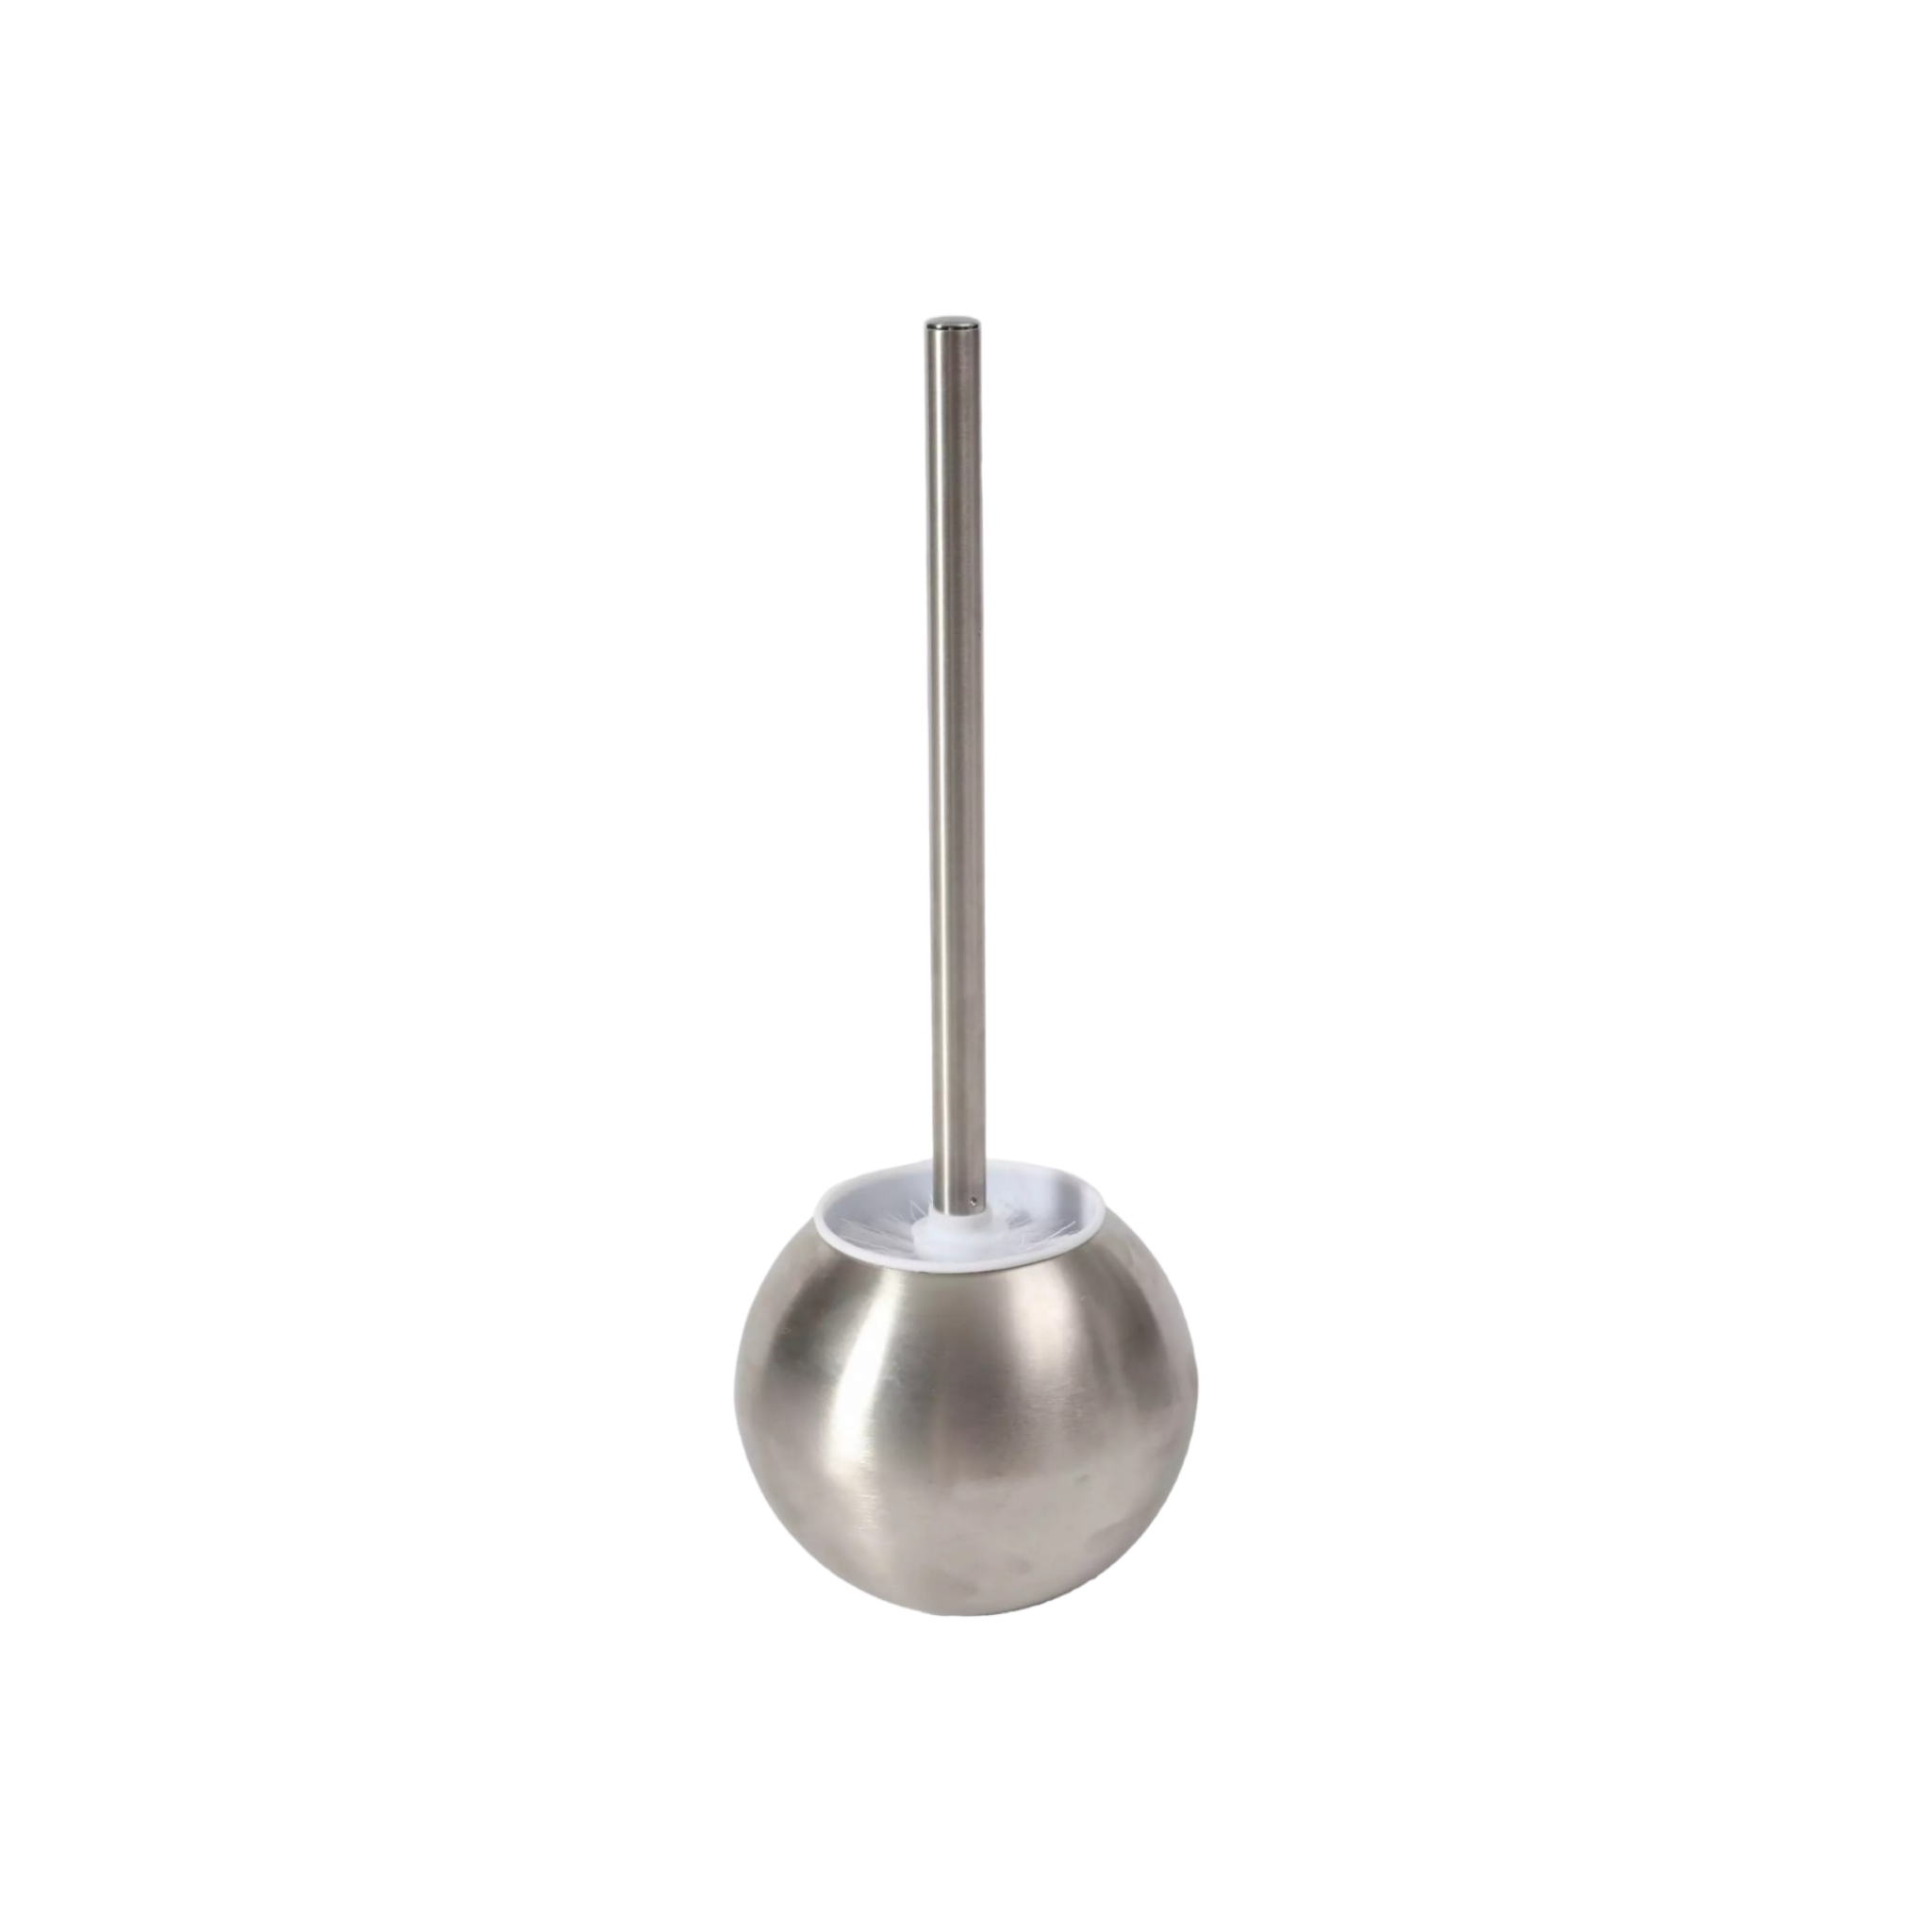 Sphere Toilet Brush with holder Stainless Steel 067